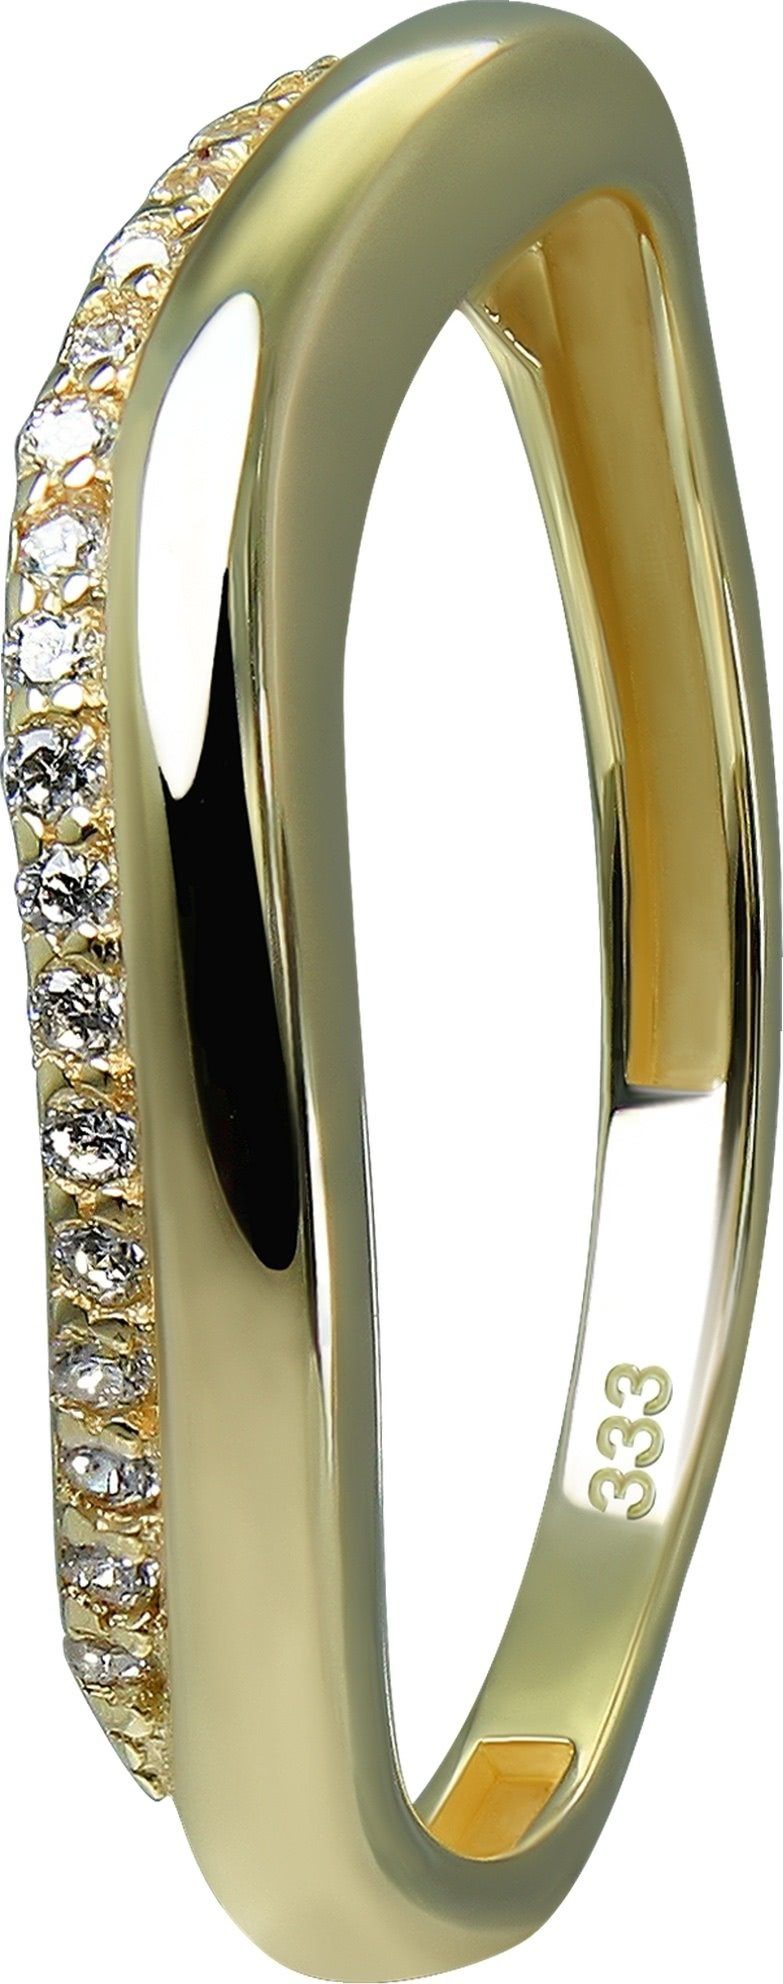 GoldDream Goldring GoldDream Gold Ring Welle Gr.56 Zirkonia (Fingerring), Damen Ring Welle 333 Gelbgold - 8 Karat, Farbe: gold, weiß